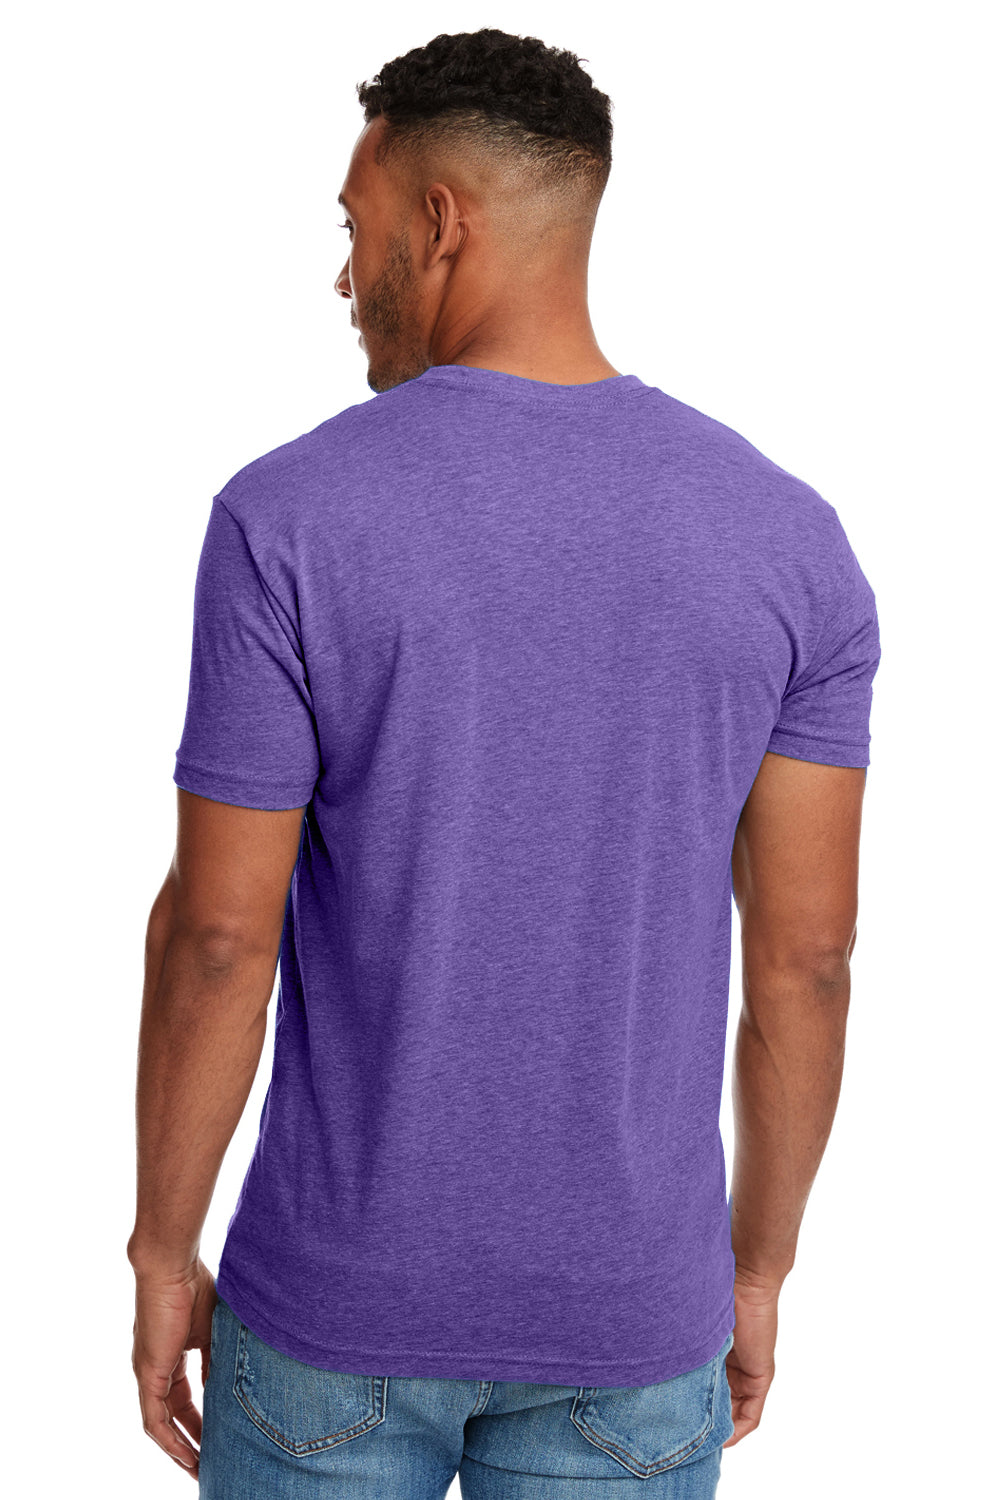 Next Level N6210 Mens CVC Jersey Short Sleeve Crewneck T-Shirt Purple Rush Back